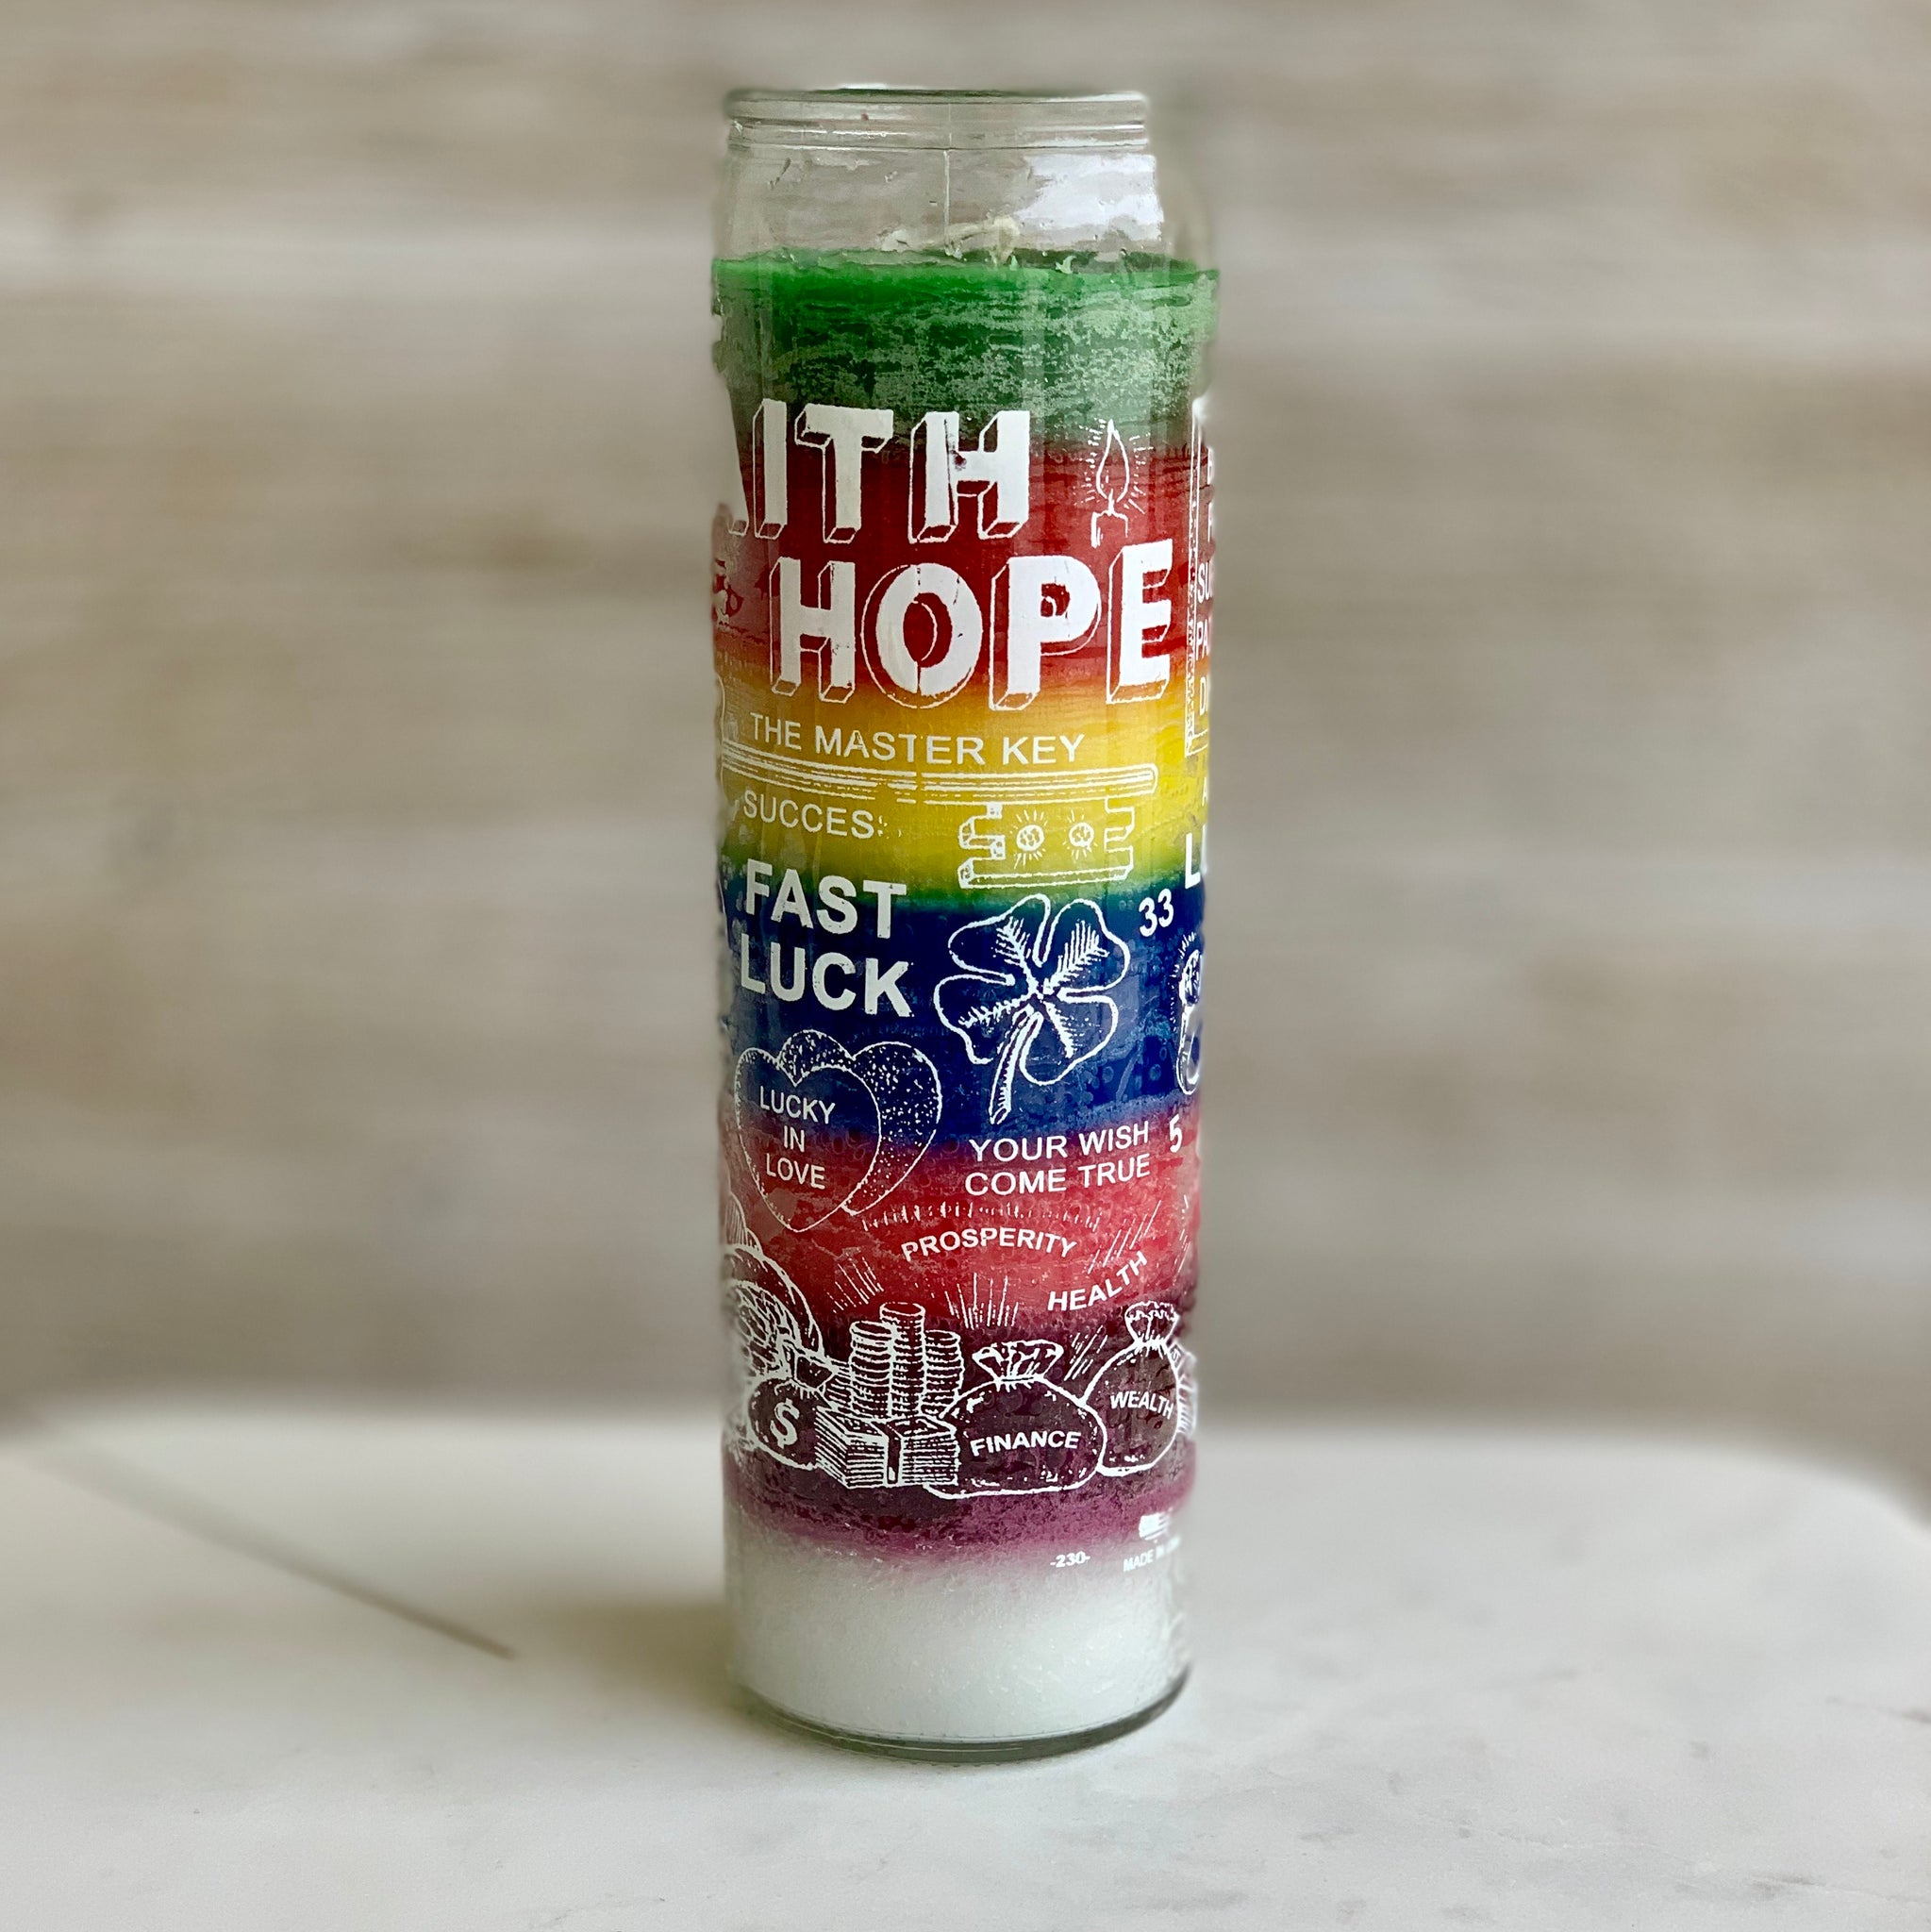 Faith & Hope Candle (7 color)